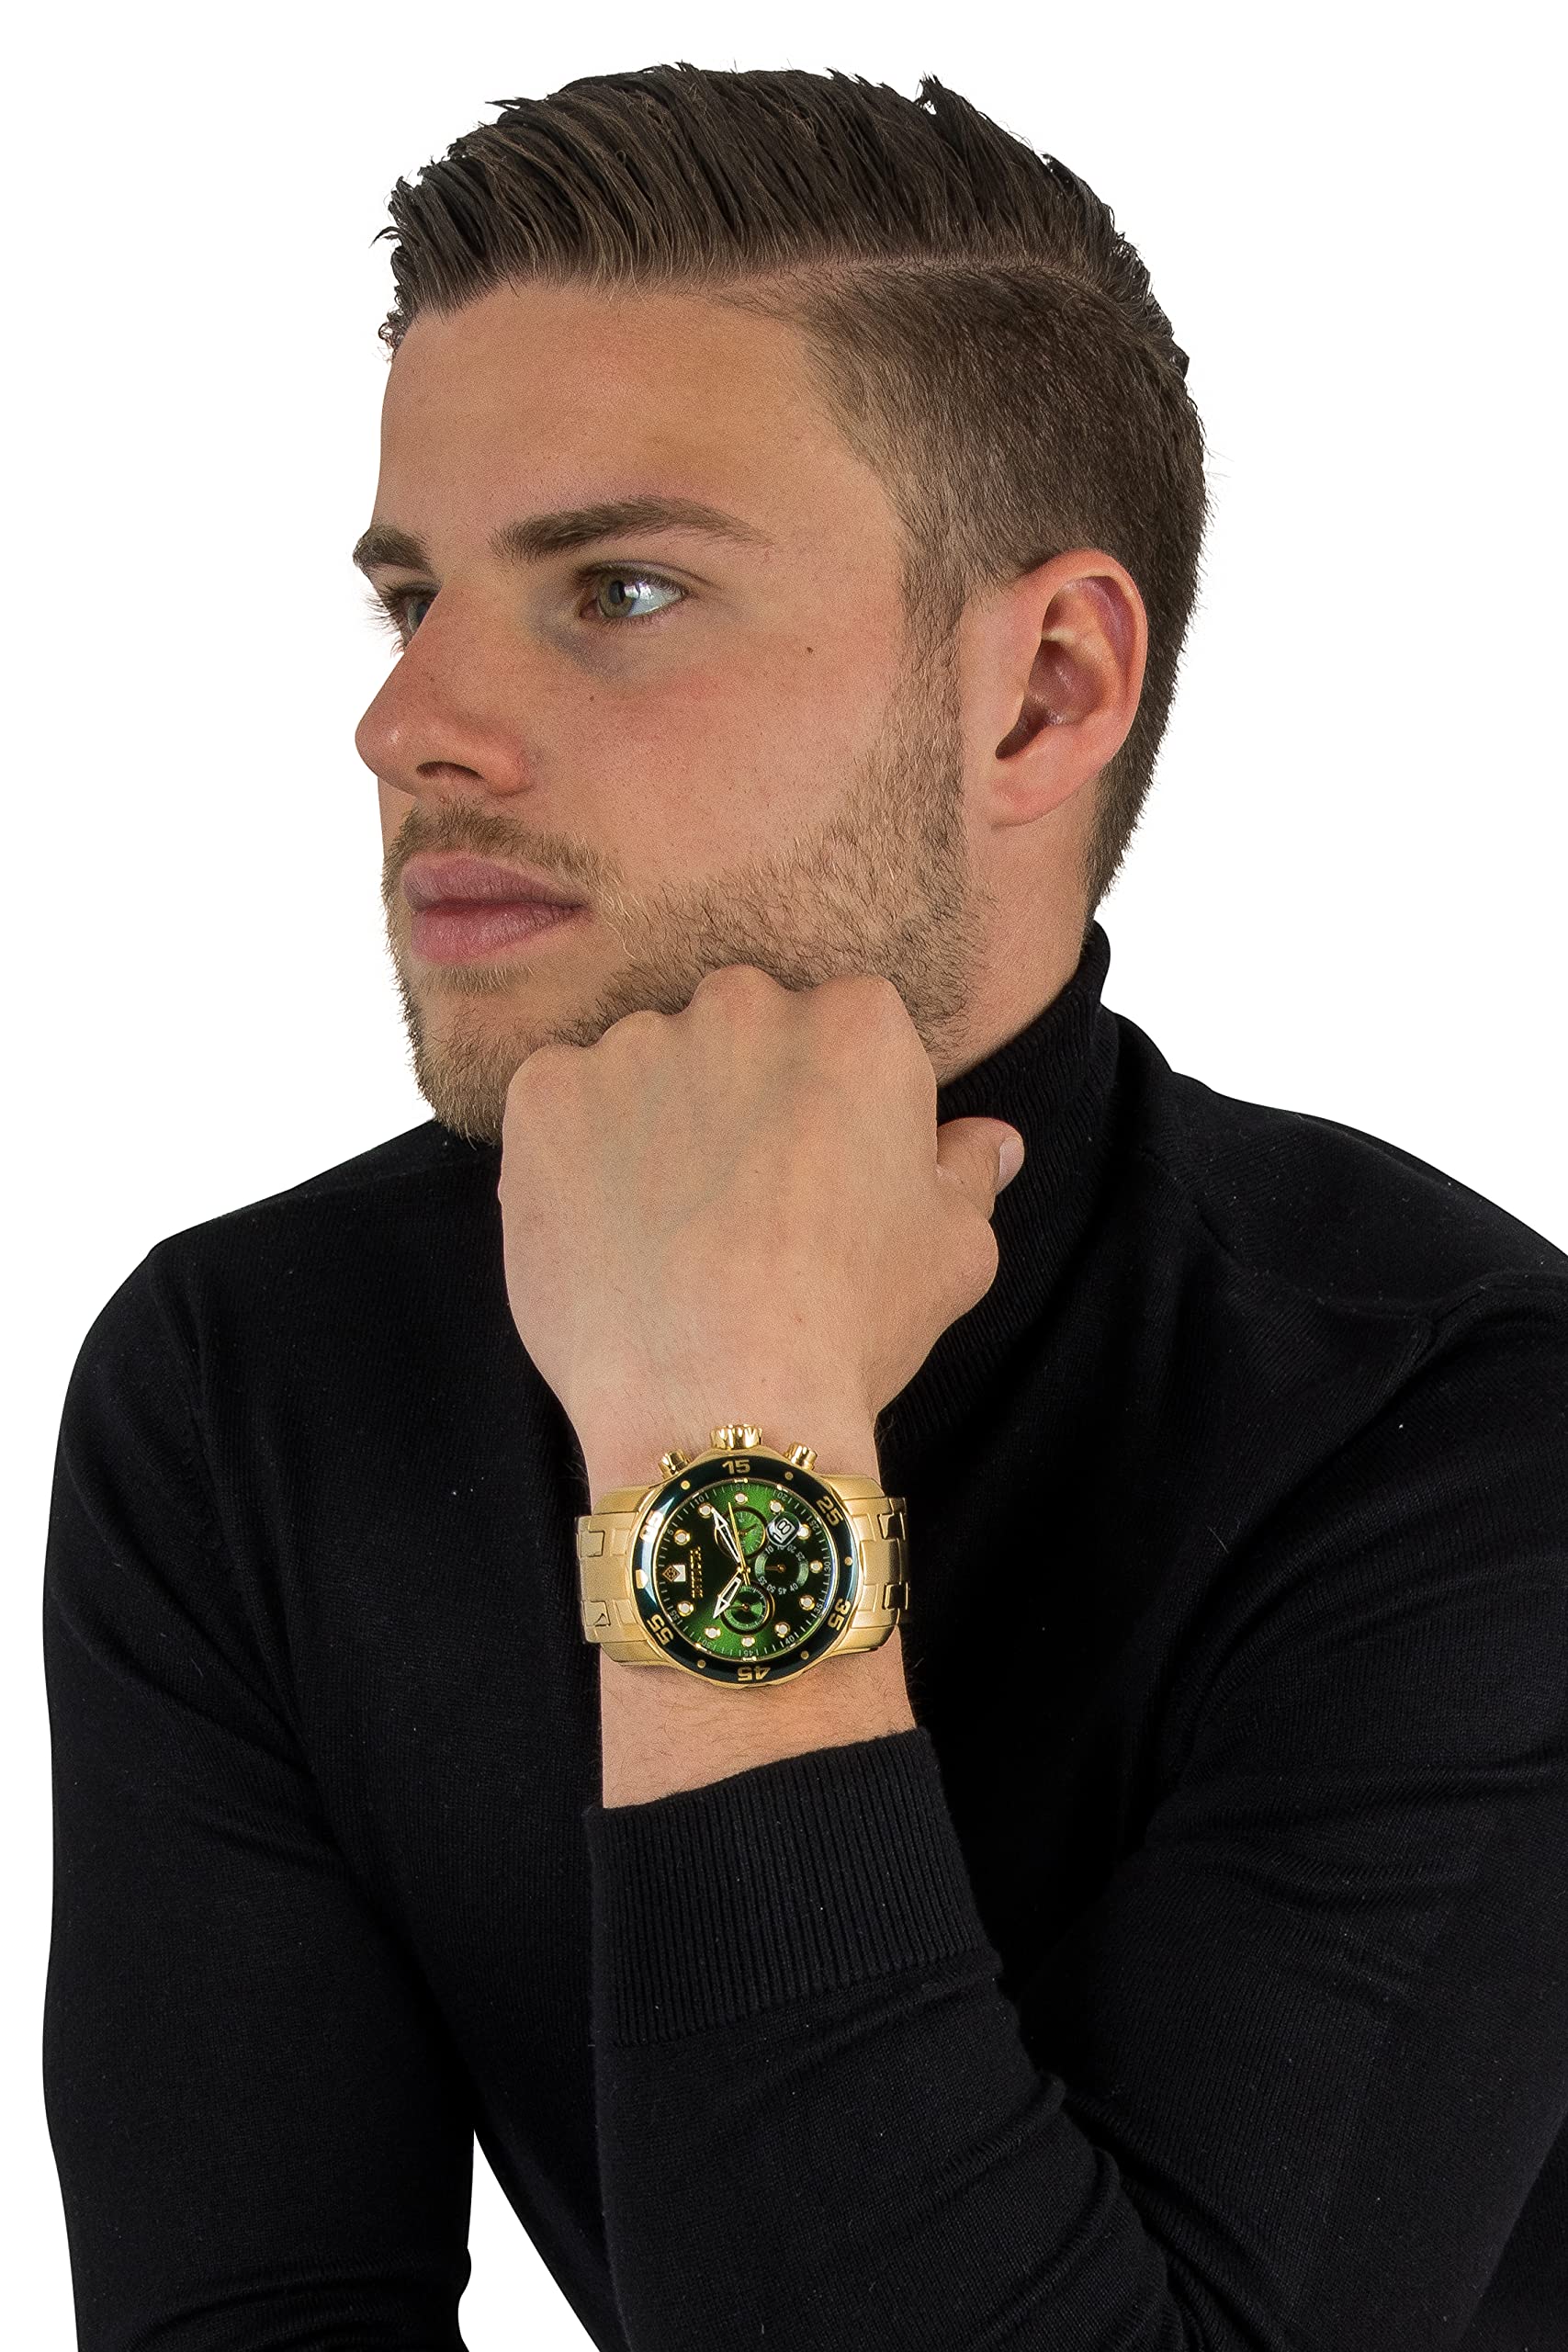 Invicta Men's Pro Diver Collection Chronograph Watch